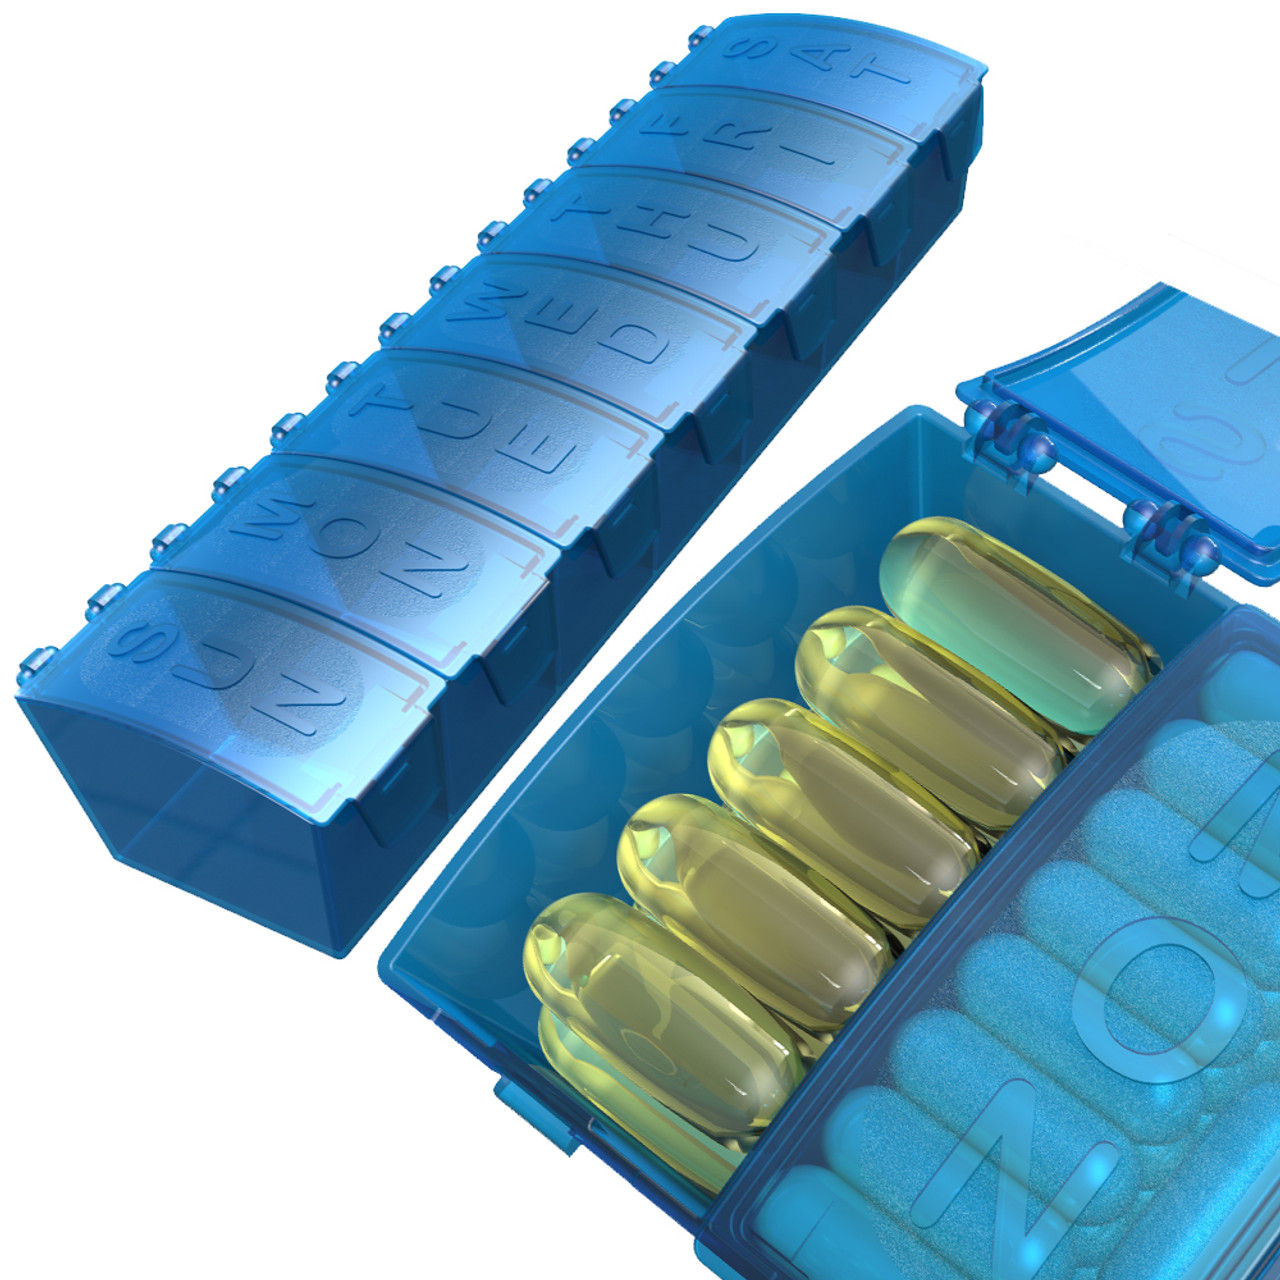 Transform An Ordinary Pillbox Into A Traveling Medicine Cabinet!